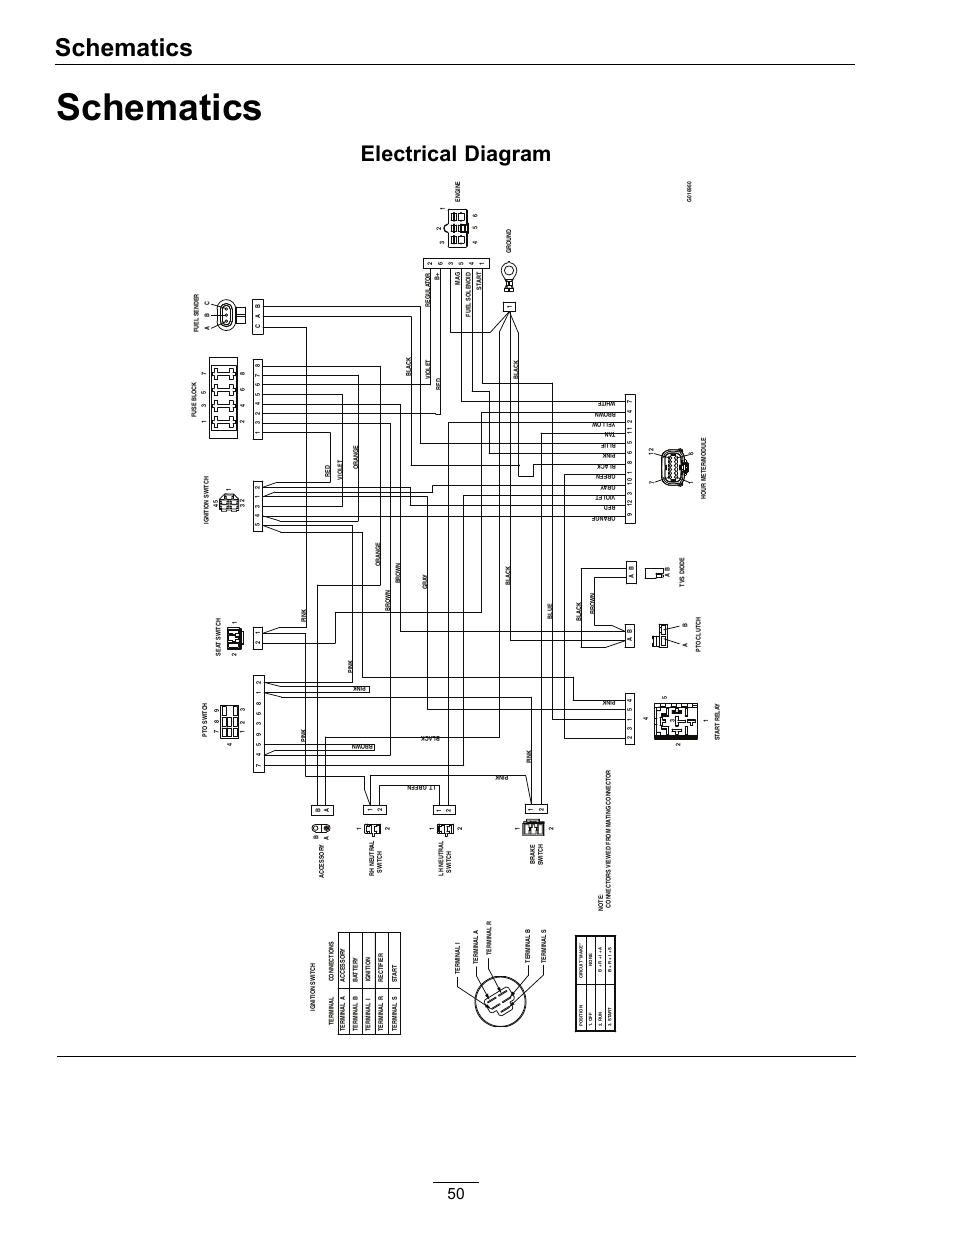 adiovox ms-125 wiring diagram